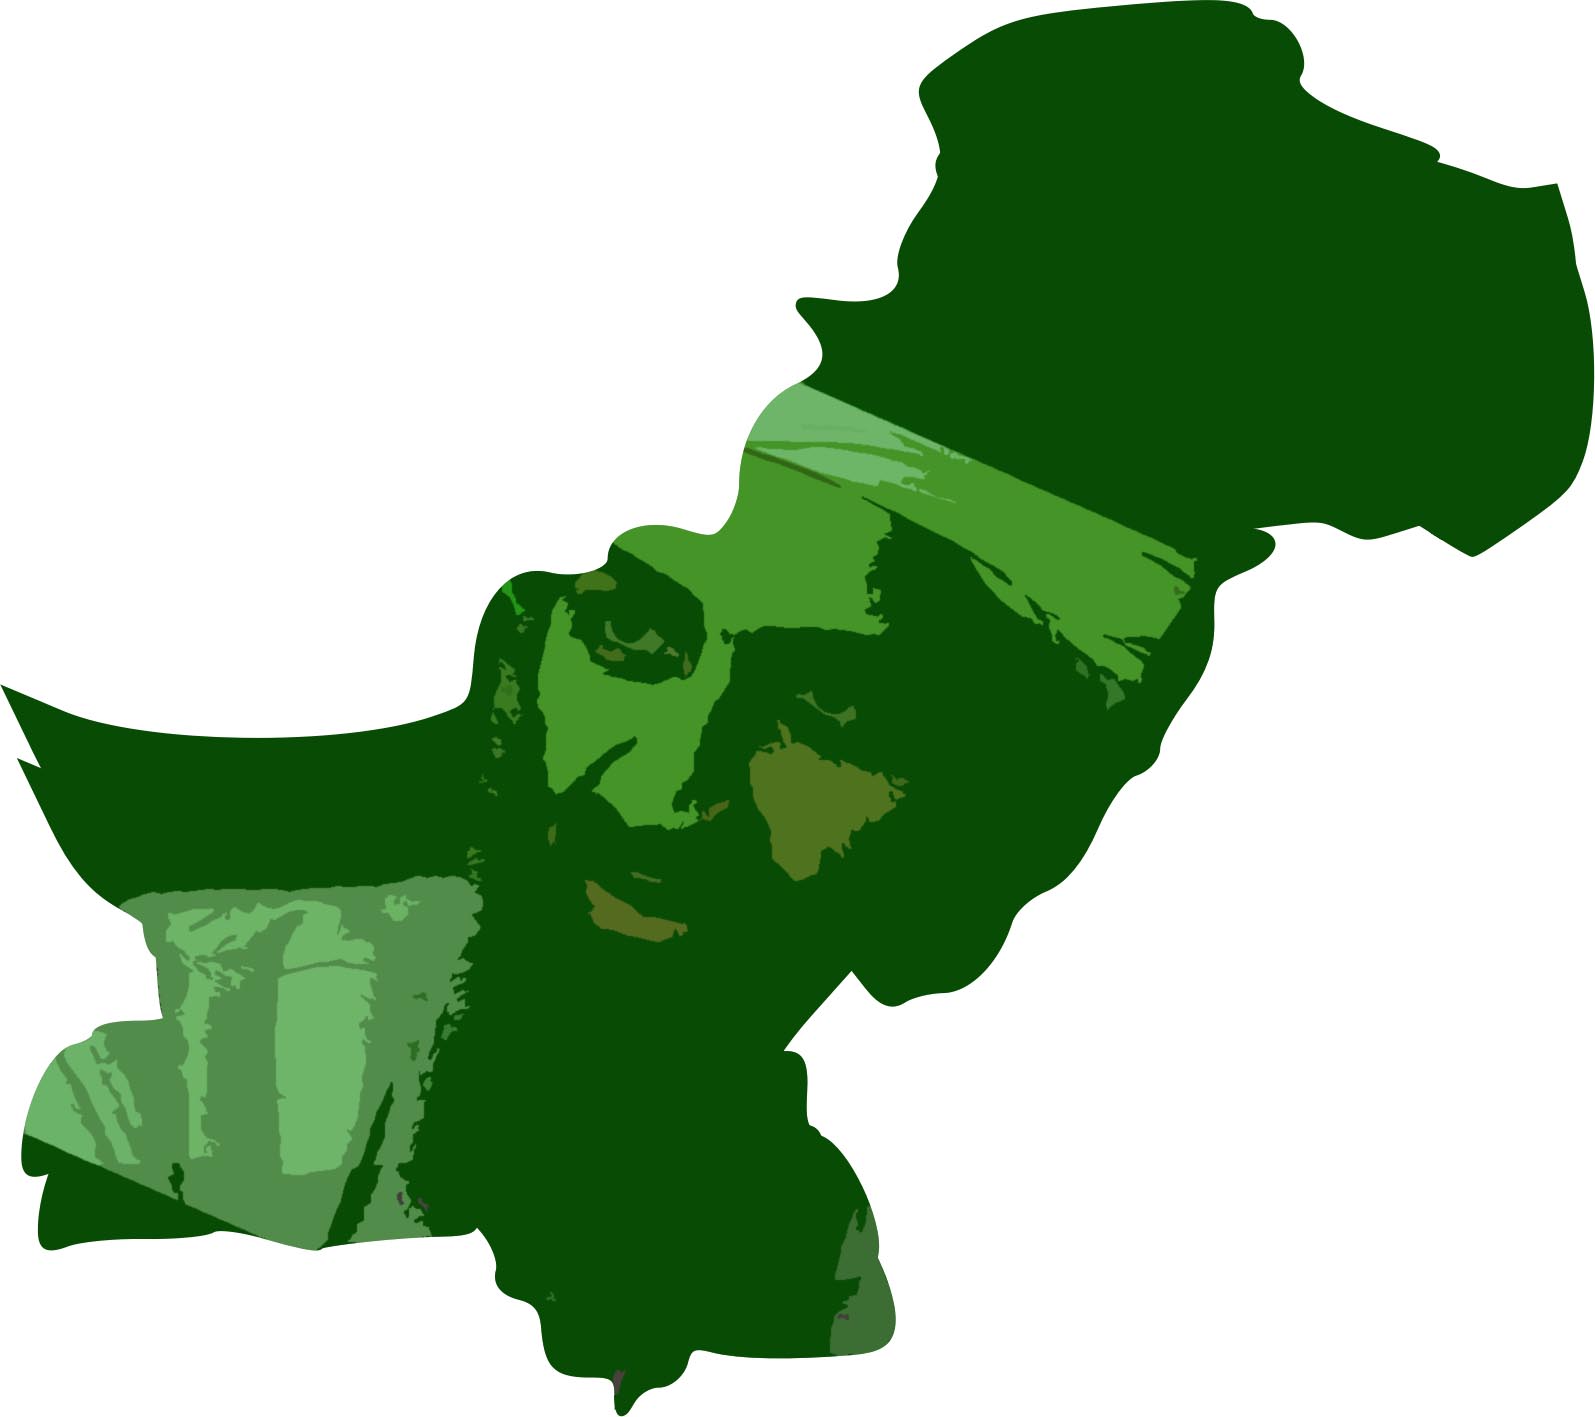 Pakistan_Osama